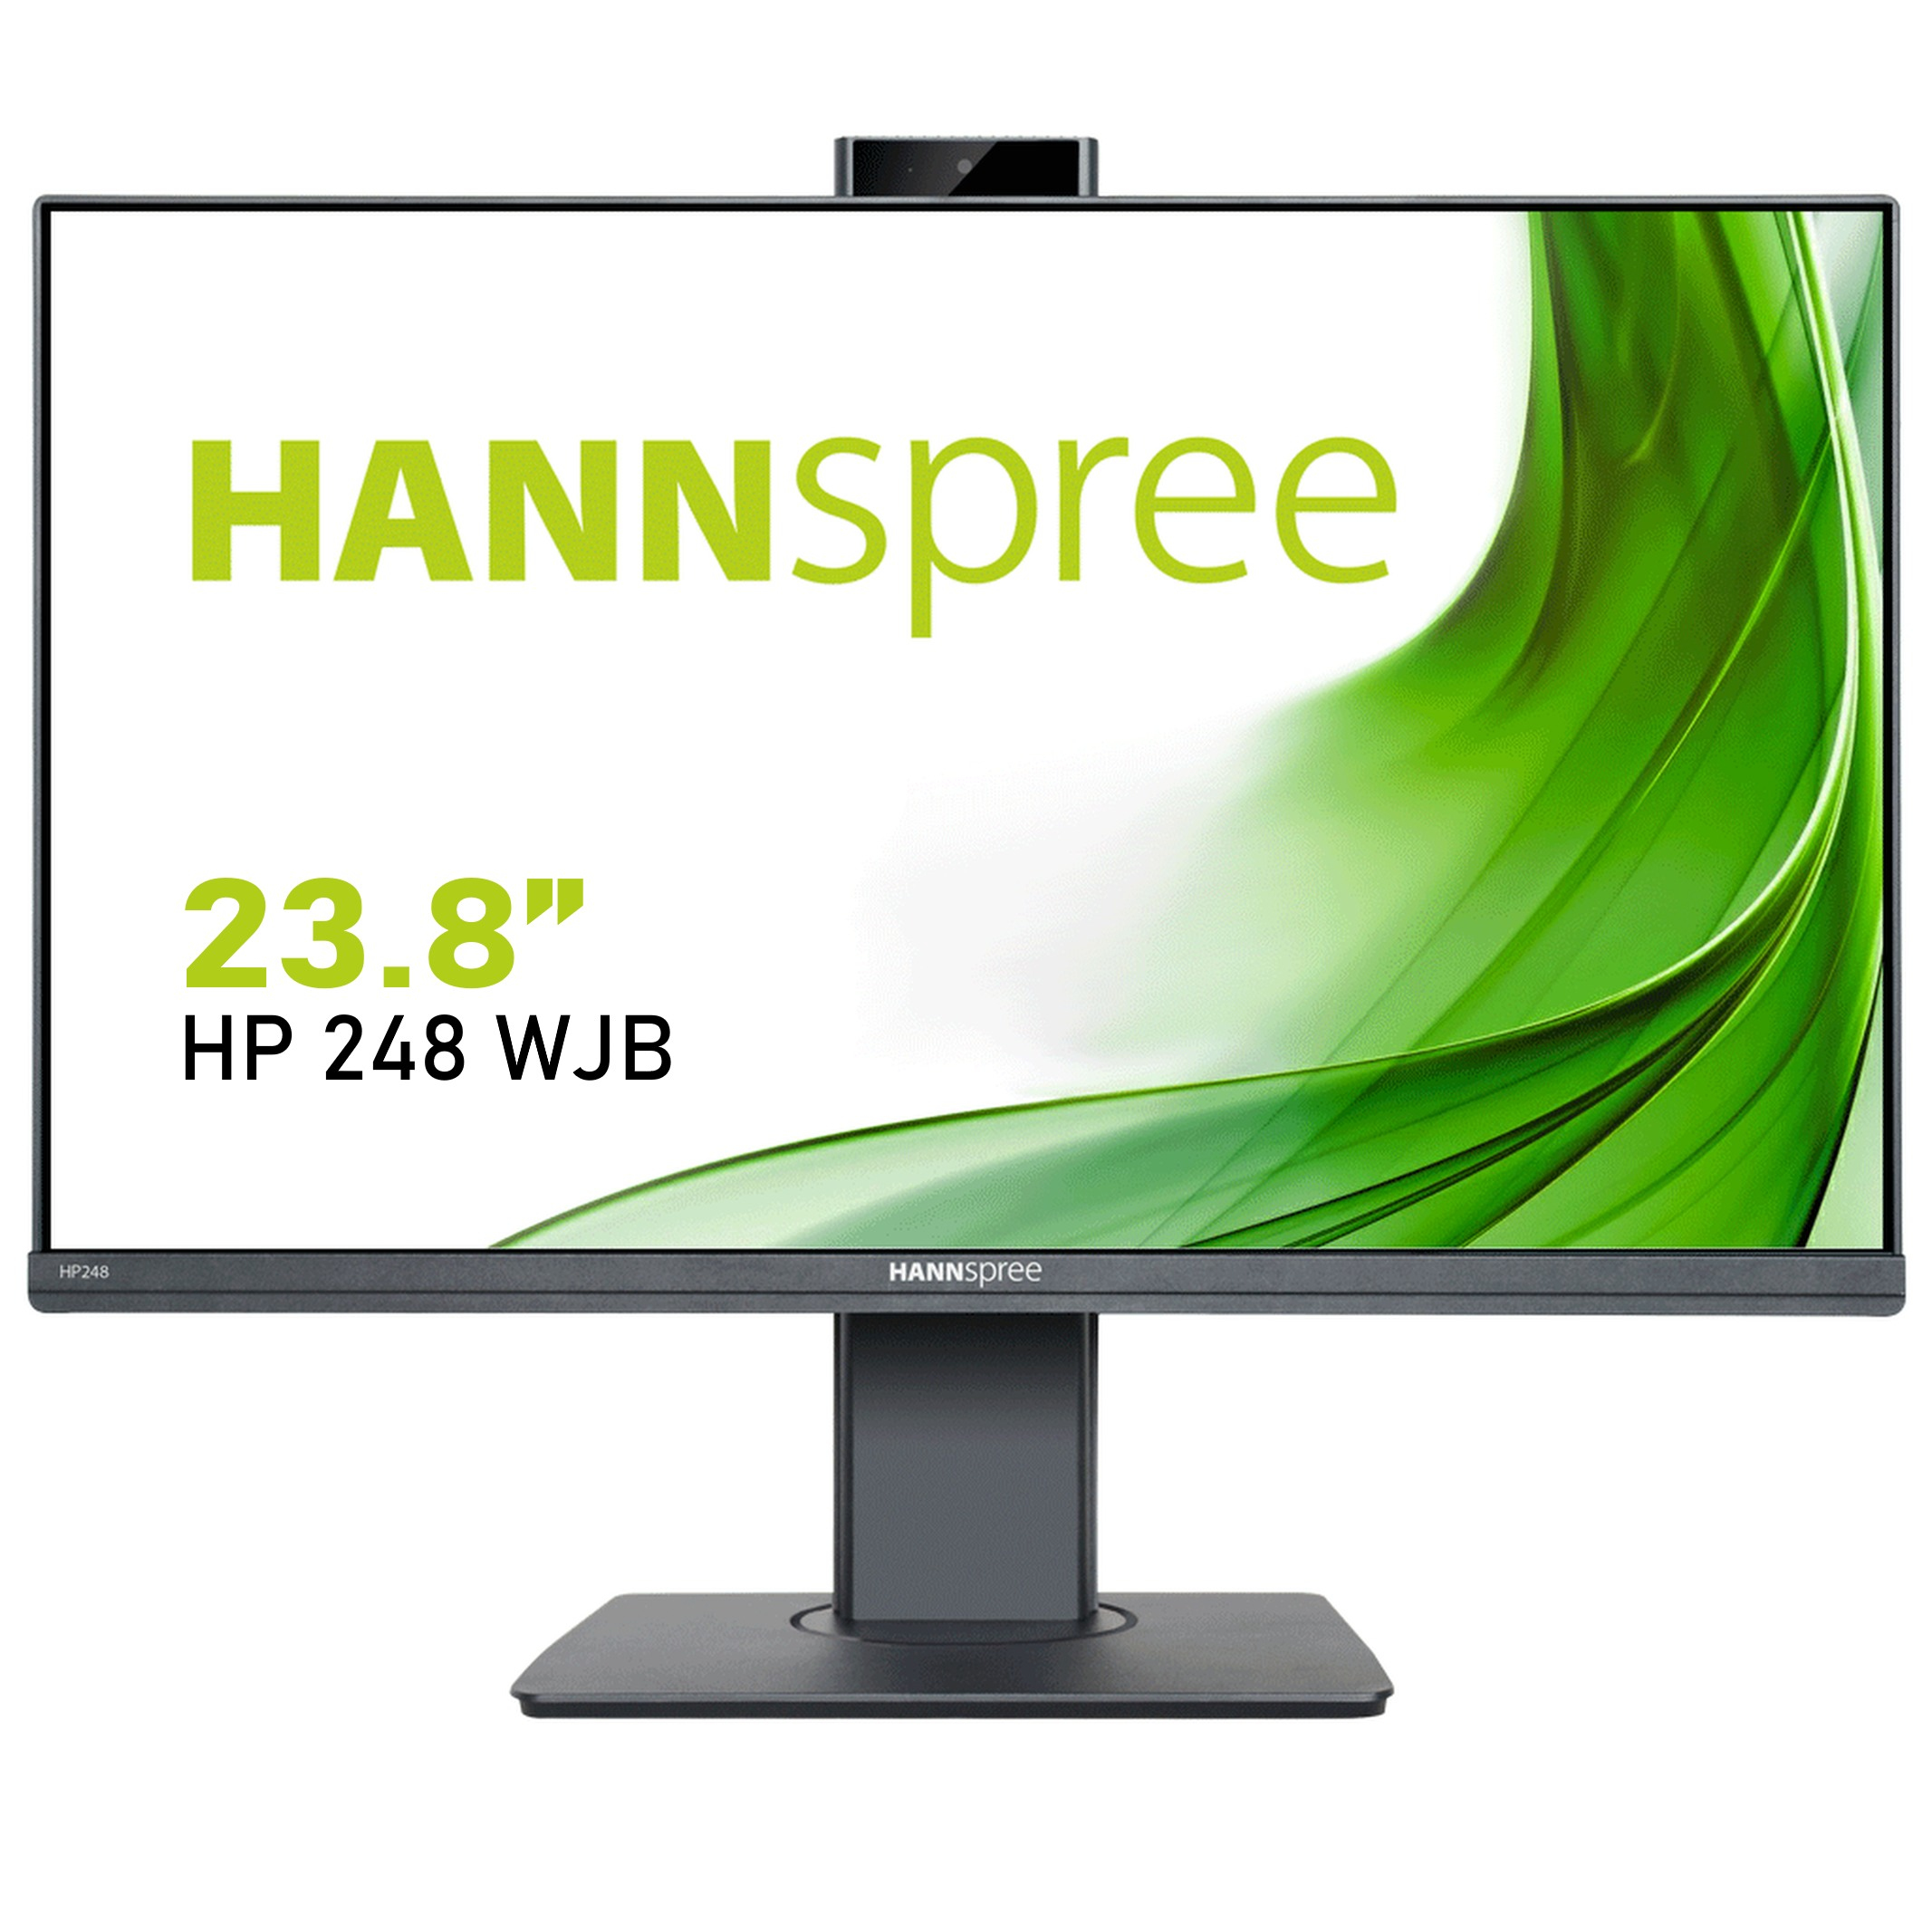 Hannspree HP248WJB LED display